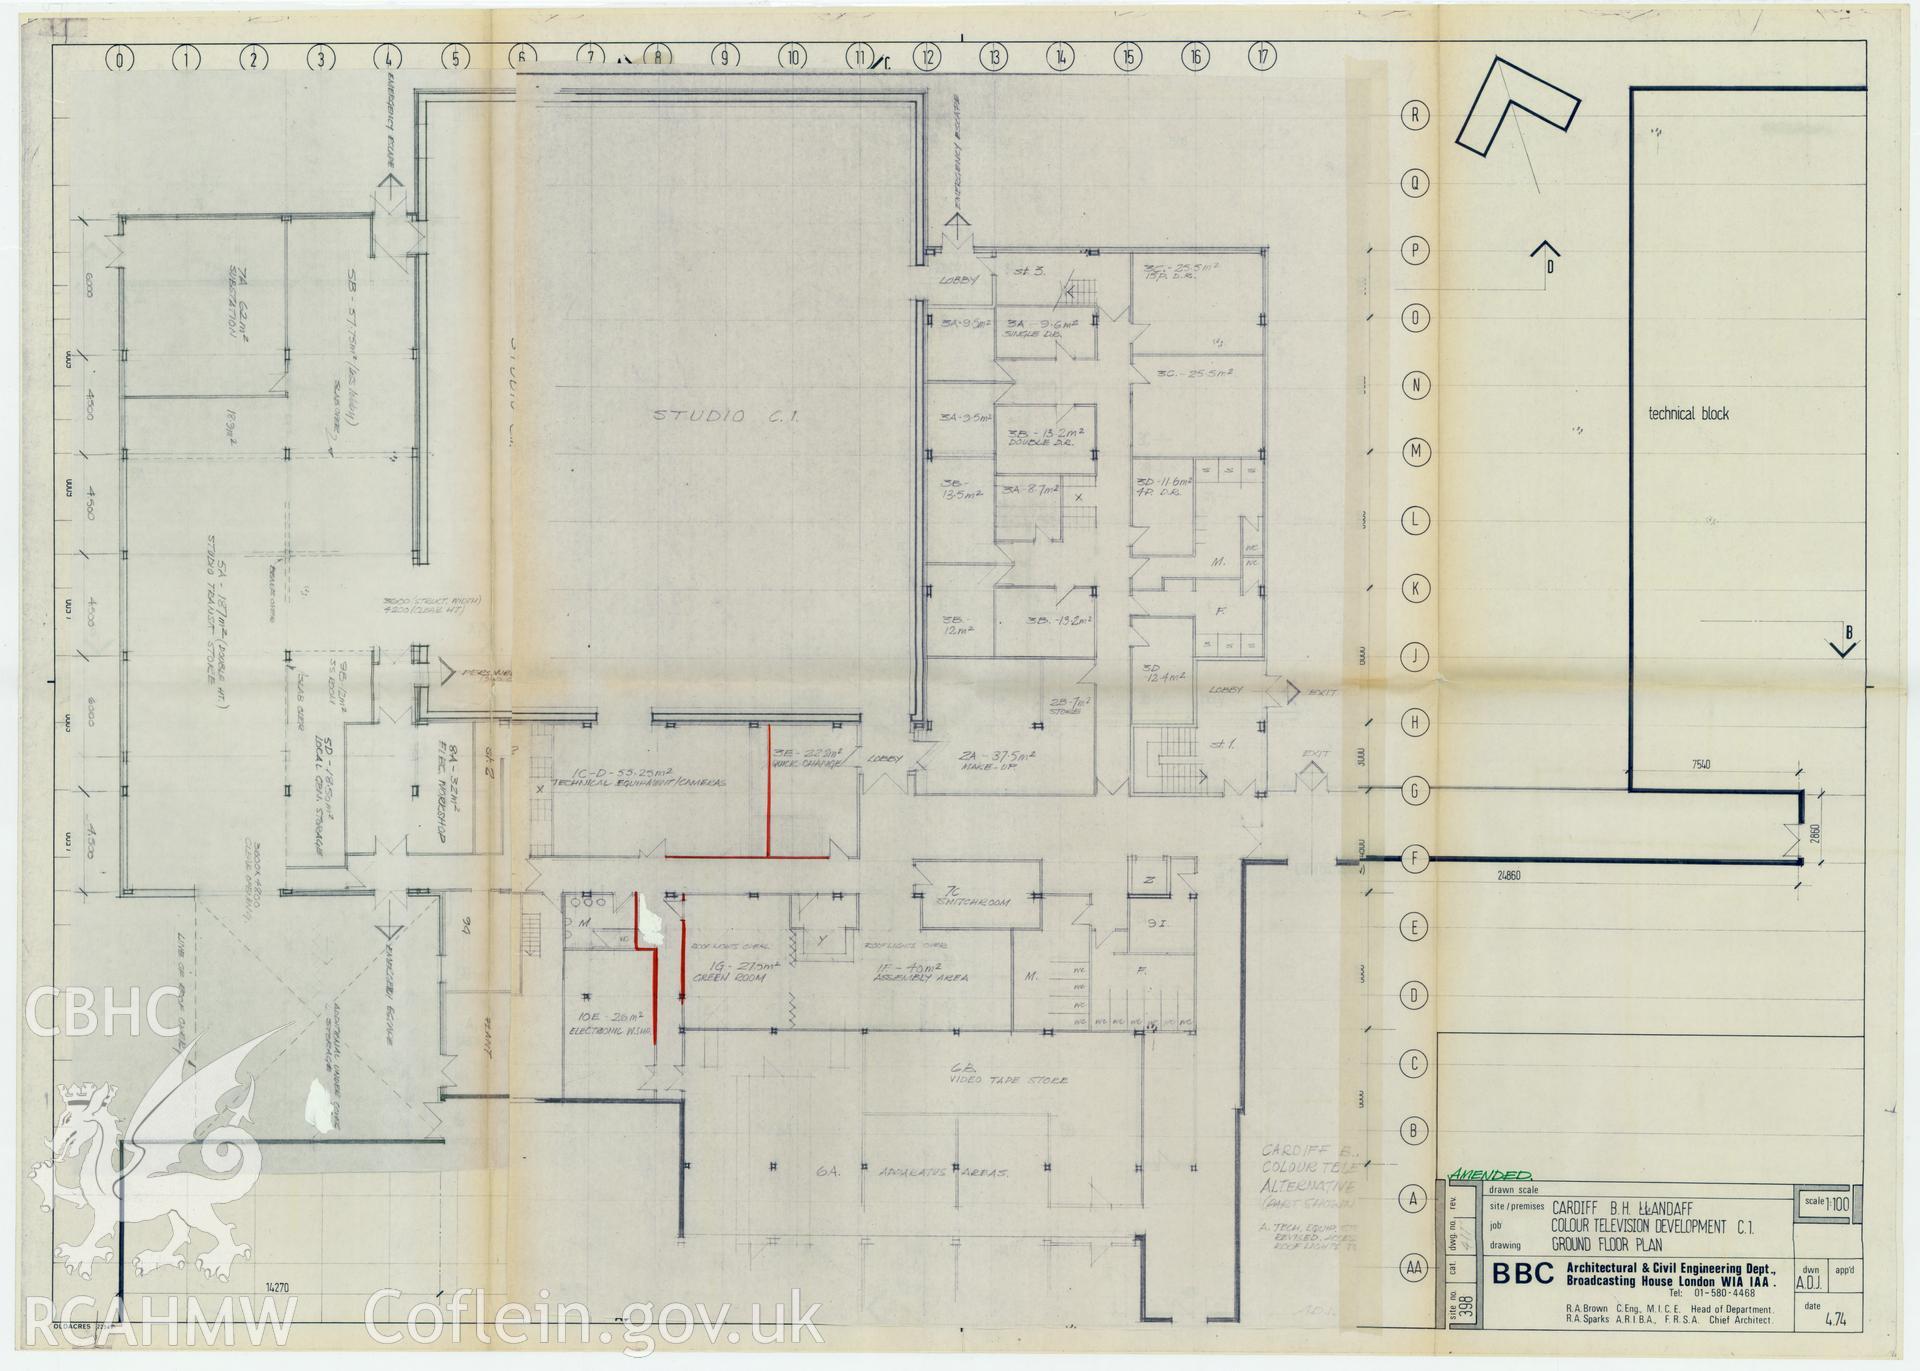 Digitised drawing plan of Llandaff production studio C1 Colour TV Development - Alternative 5 ground floor plan. Drawing no. 411g amended. May 1974.